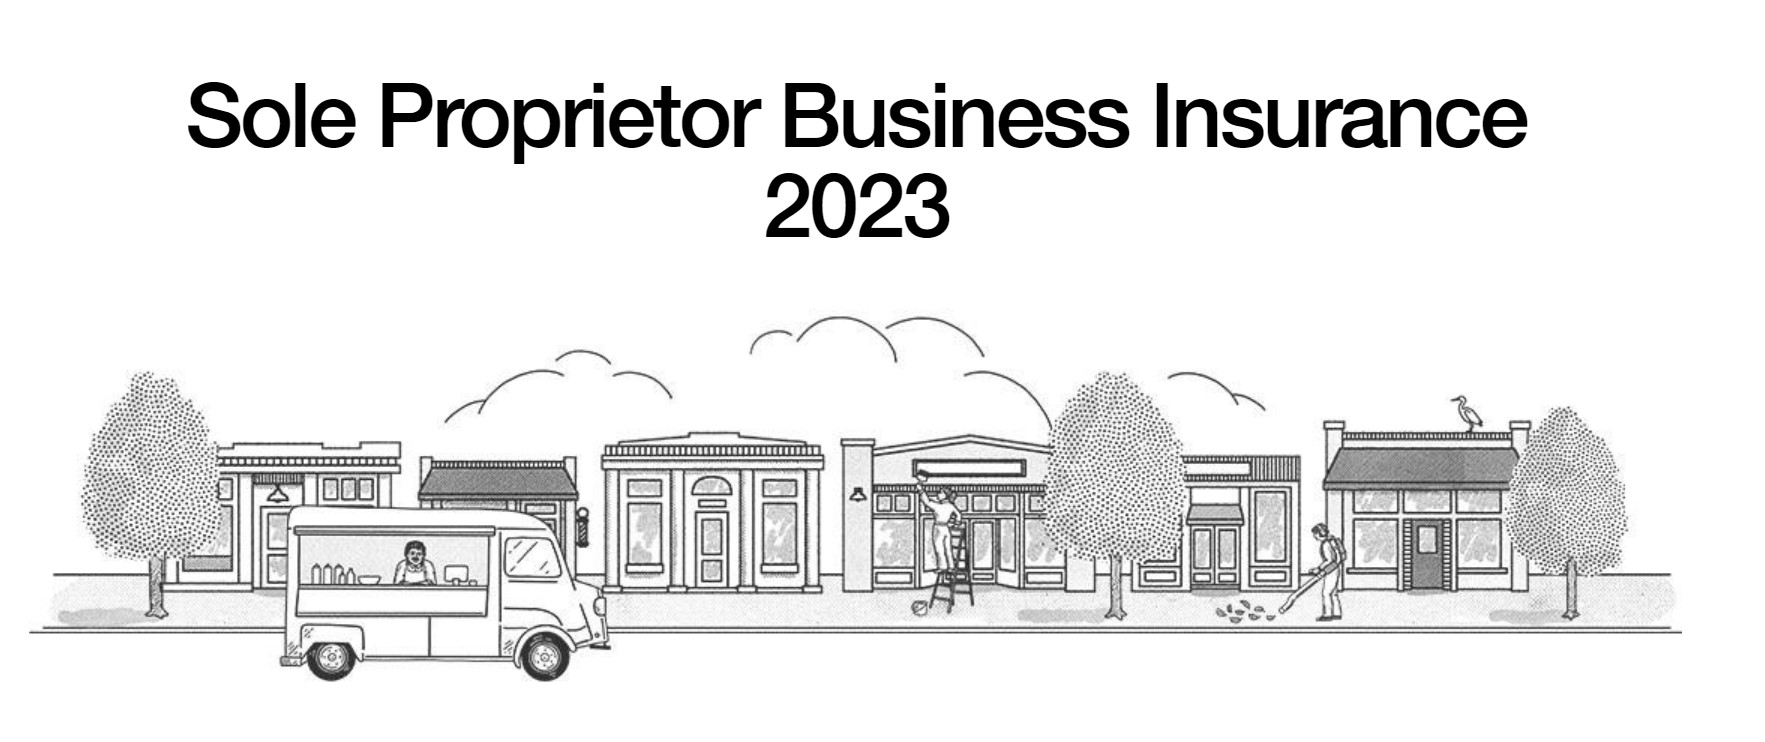 Best Sole Proprietor Business Insurance 2023